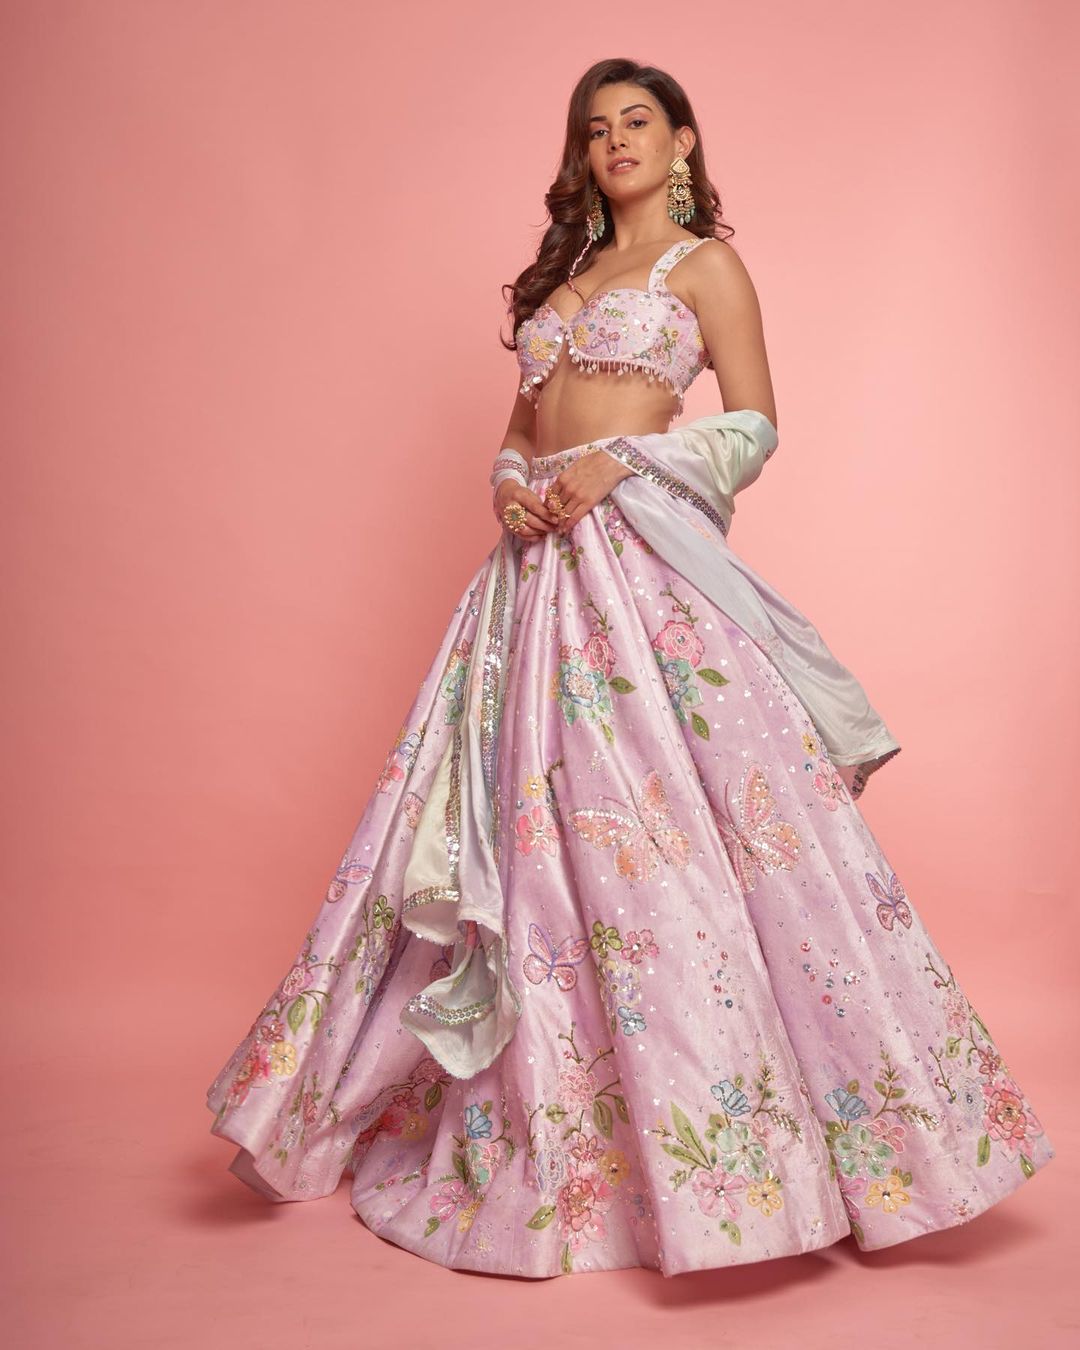 amyra dastur hot photos in grand dress getting viral on social media